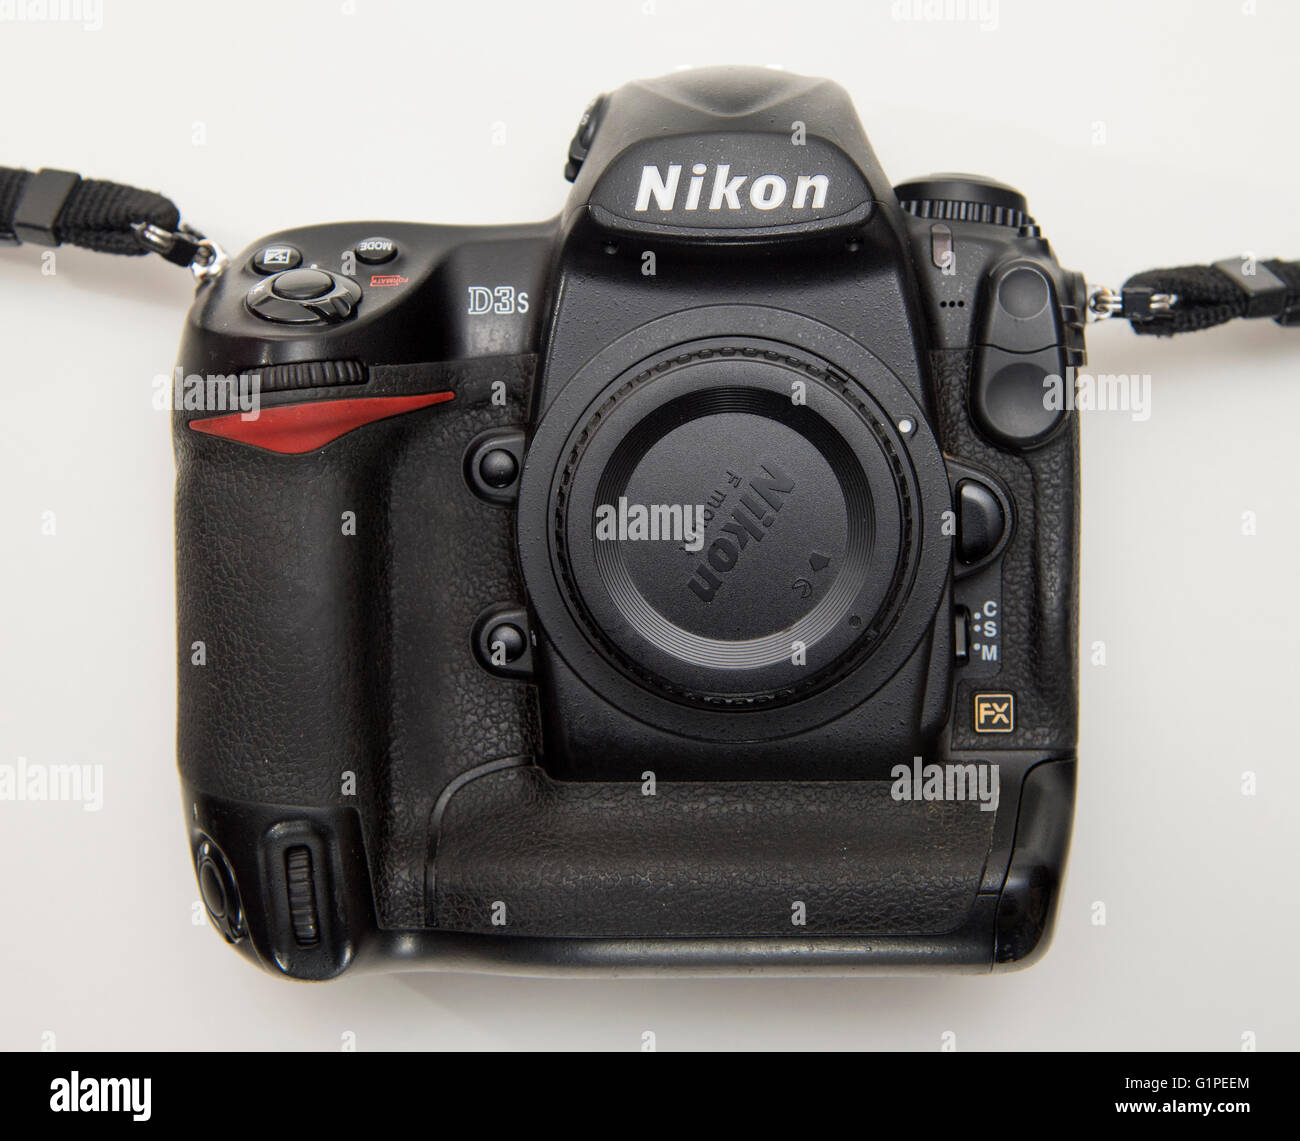 Nikon D3S professional DSLR digital camera body Stock Photo - Alamy